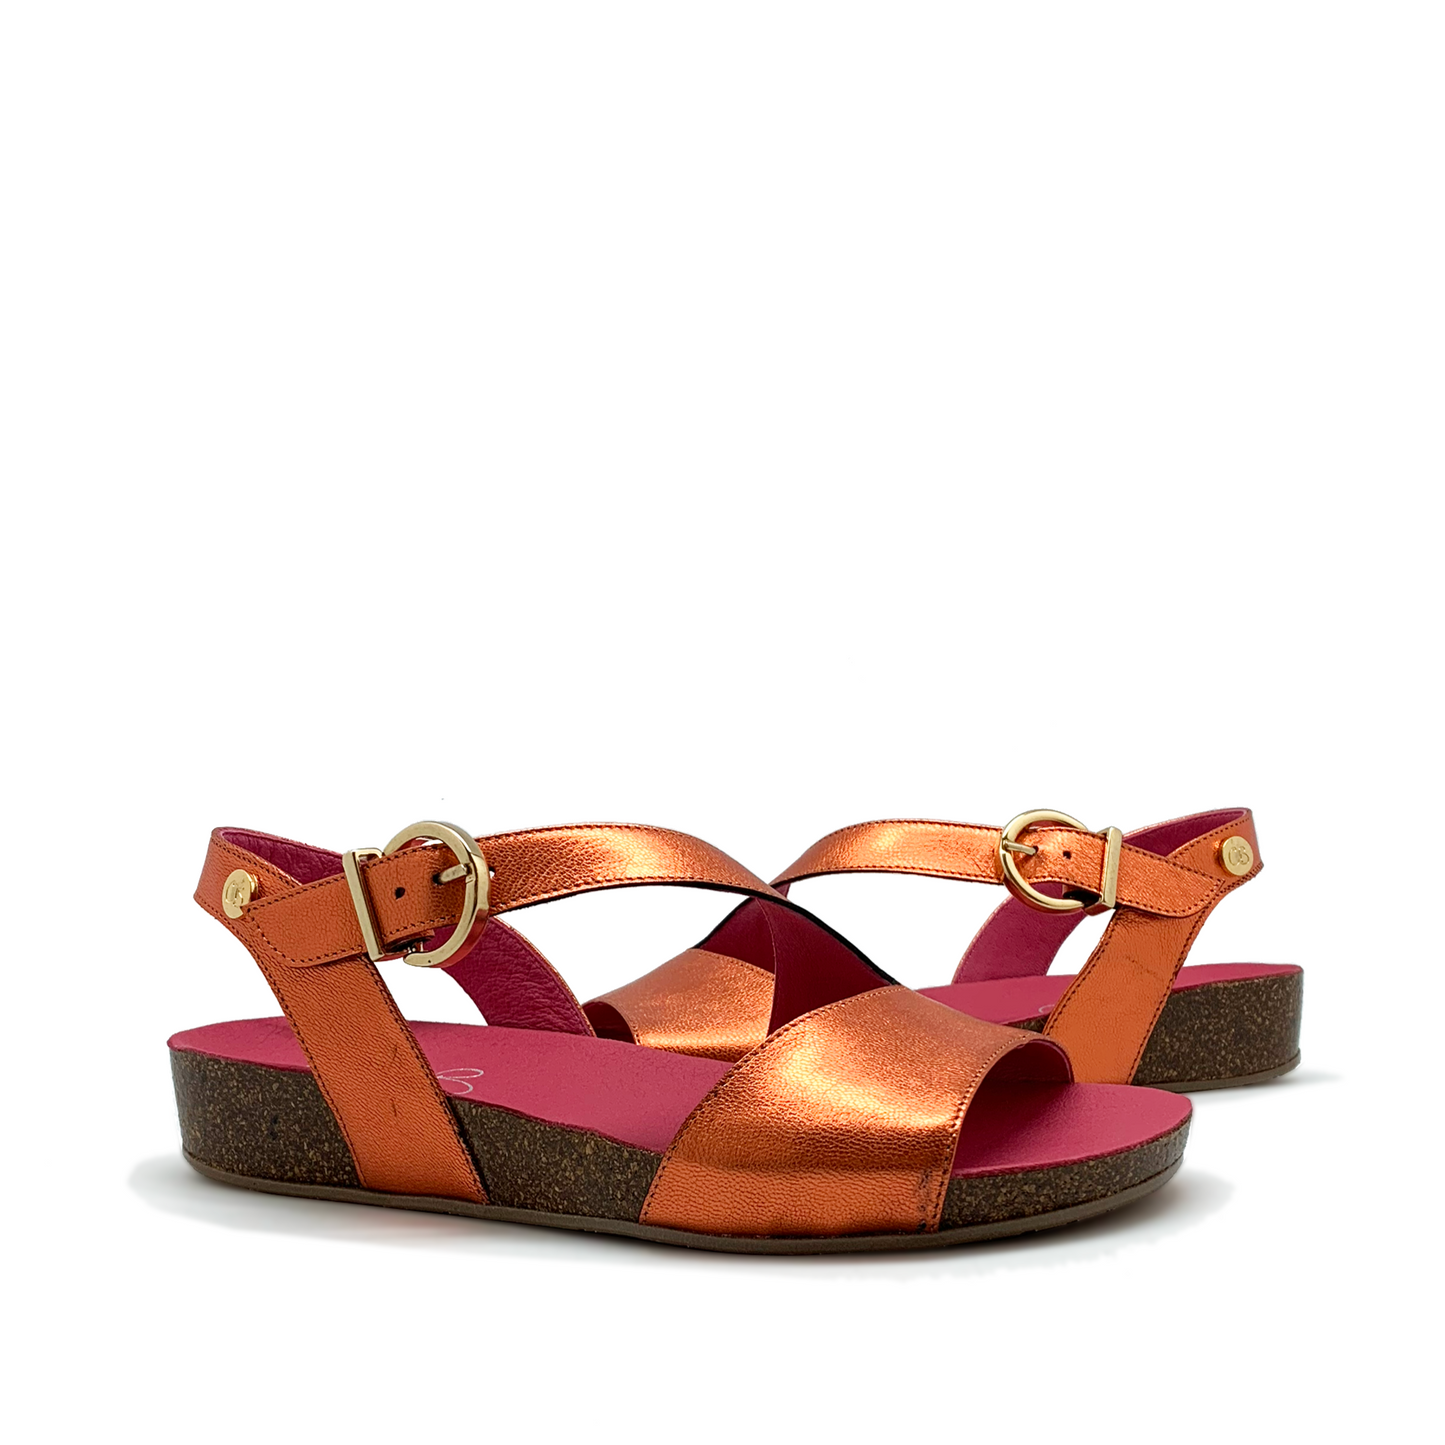 Je Ressin- Orange copper metallic flat cork sandal